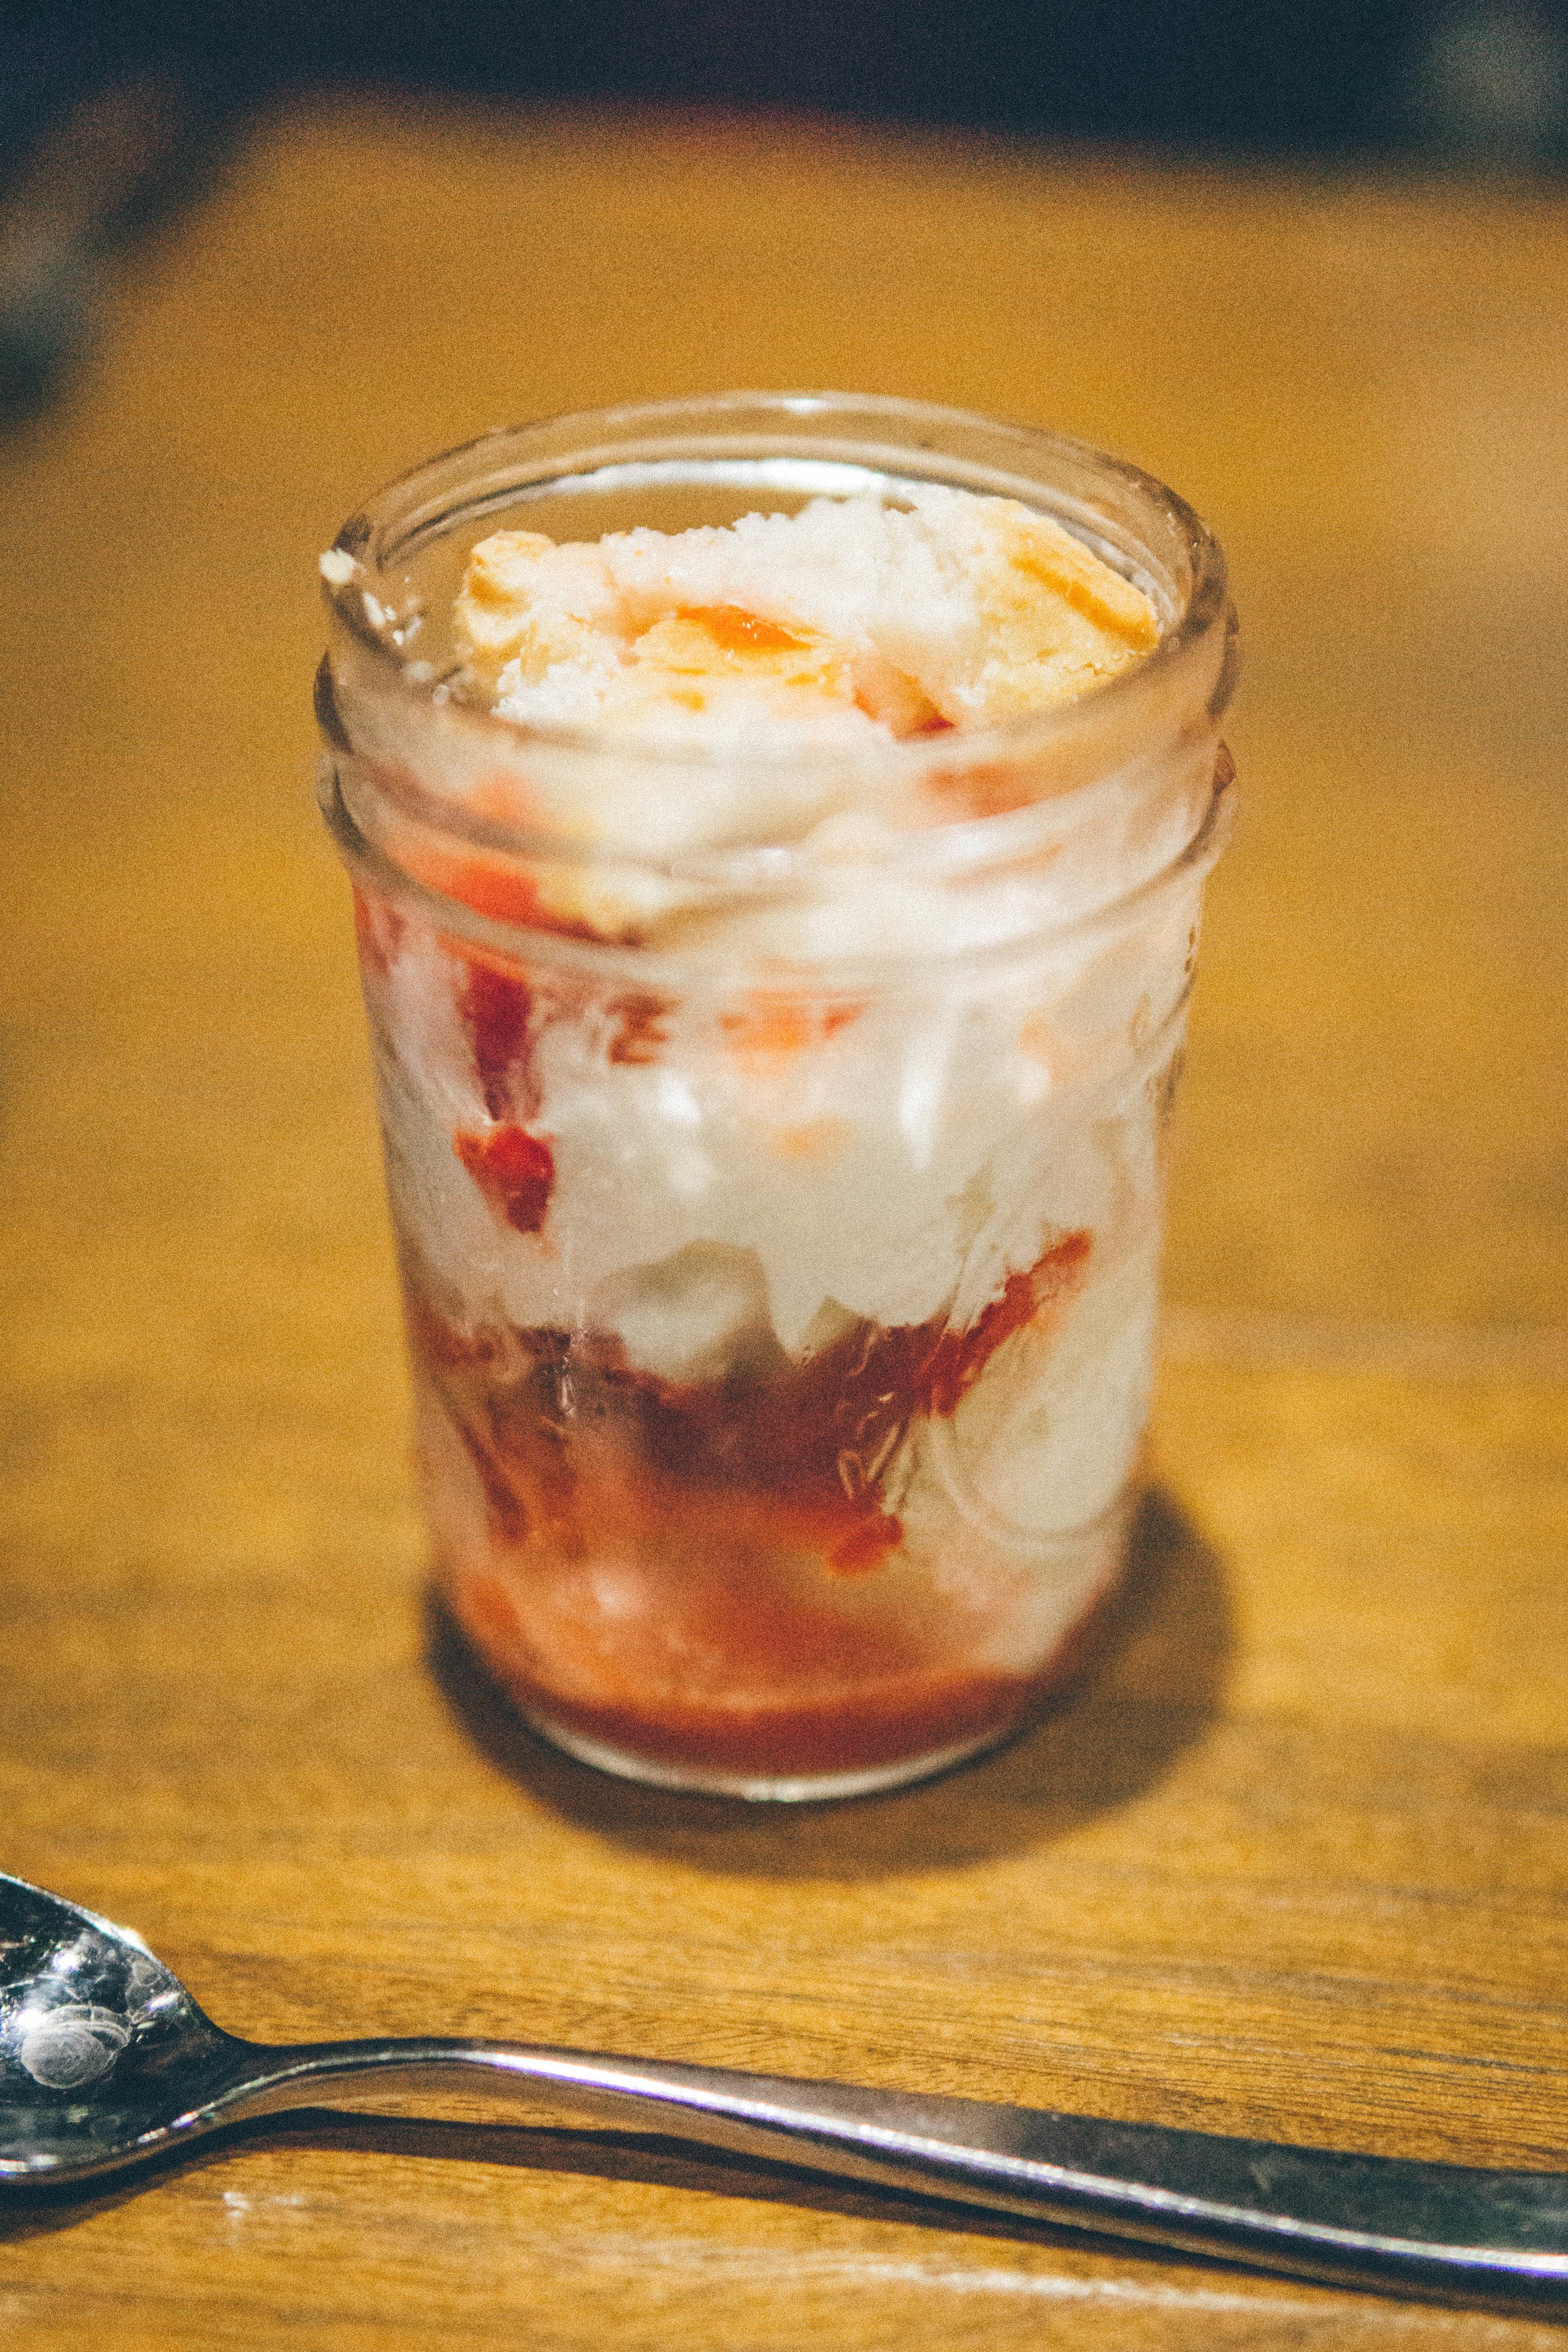  Mason Jar Strawberry Shortcake: Strawberry Ice Cream, Strawberry Filling, Biscuit Crumble 